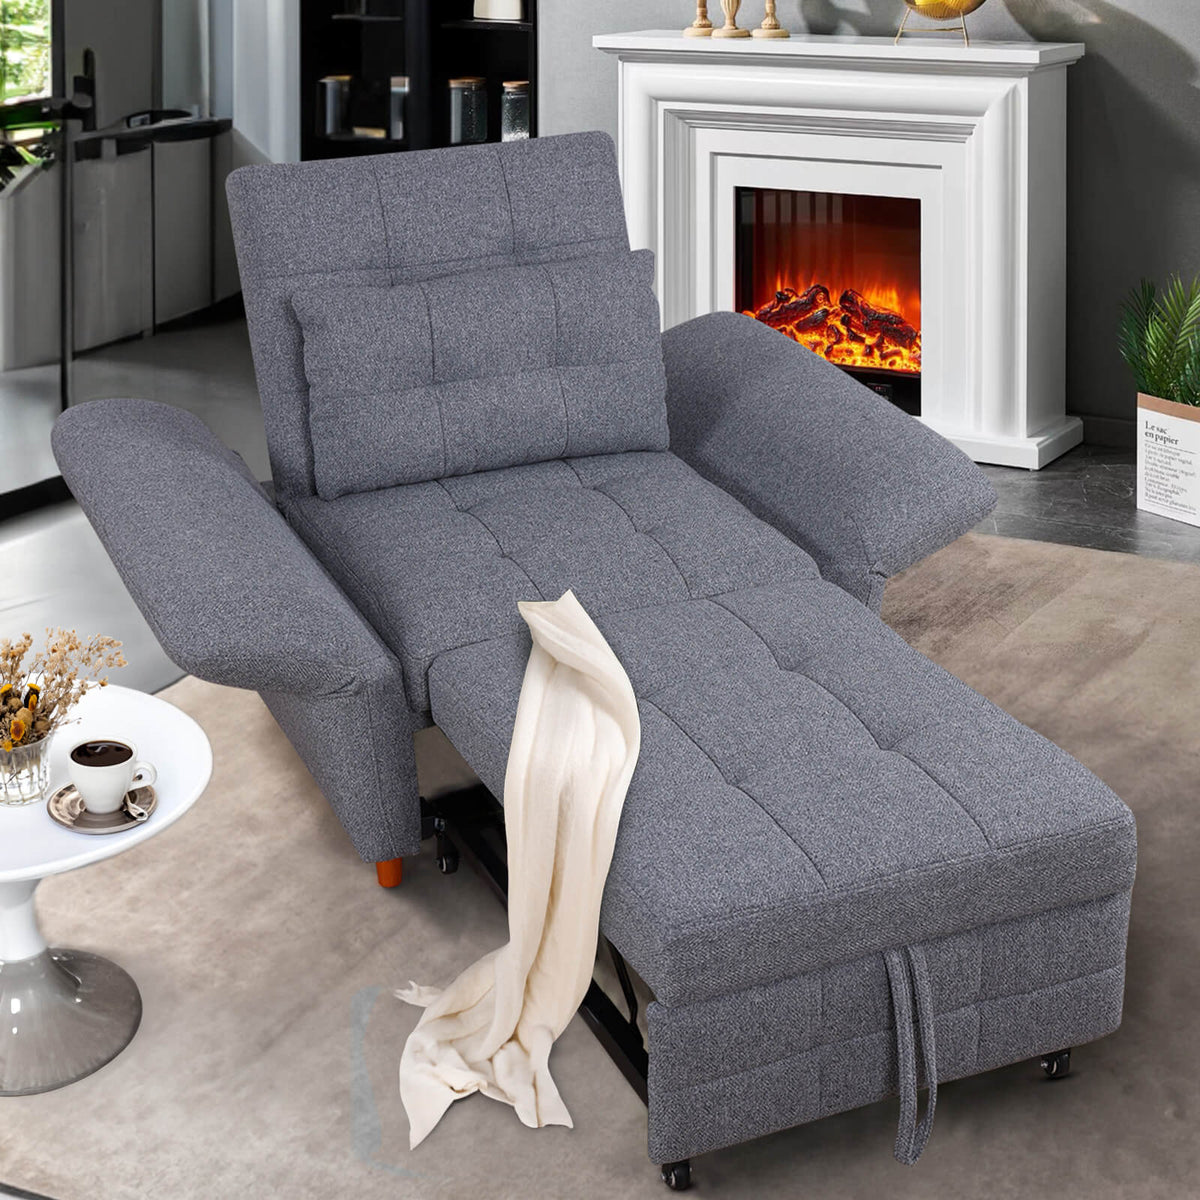 3-in-1 Sleeper Sofa Chair Bed w/ Adjustable Armrests, 3 Level Adjustable Backrest, Wood Legs & Pillow, Light Gray